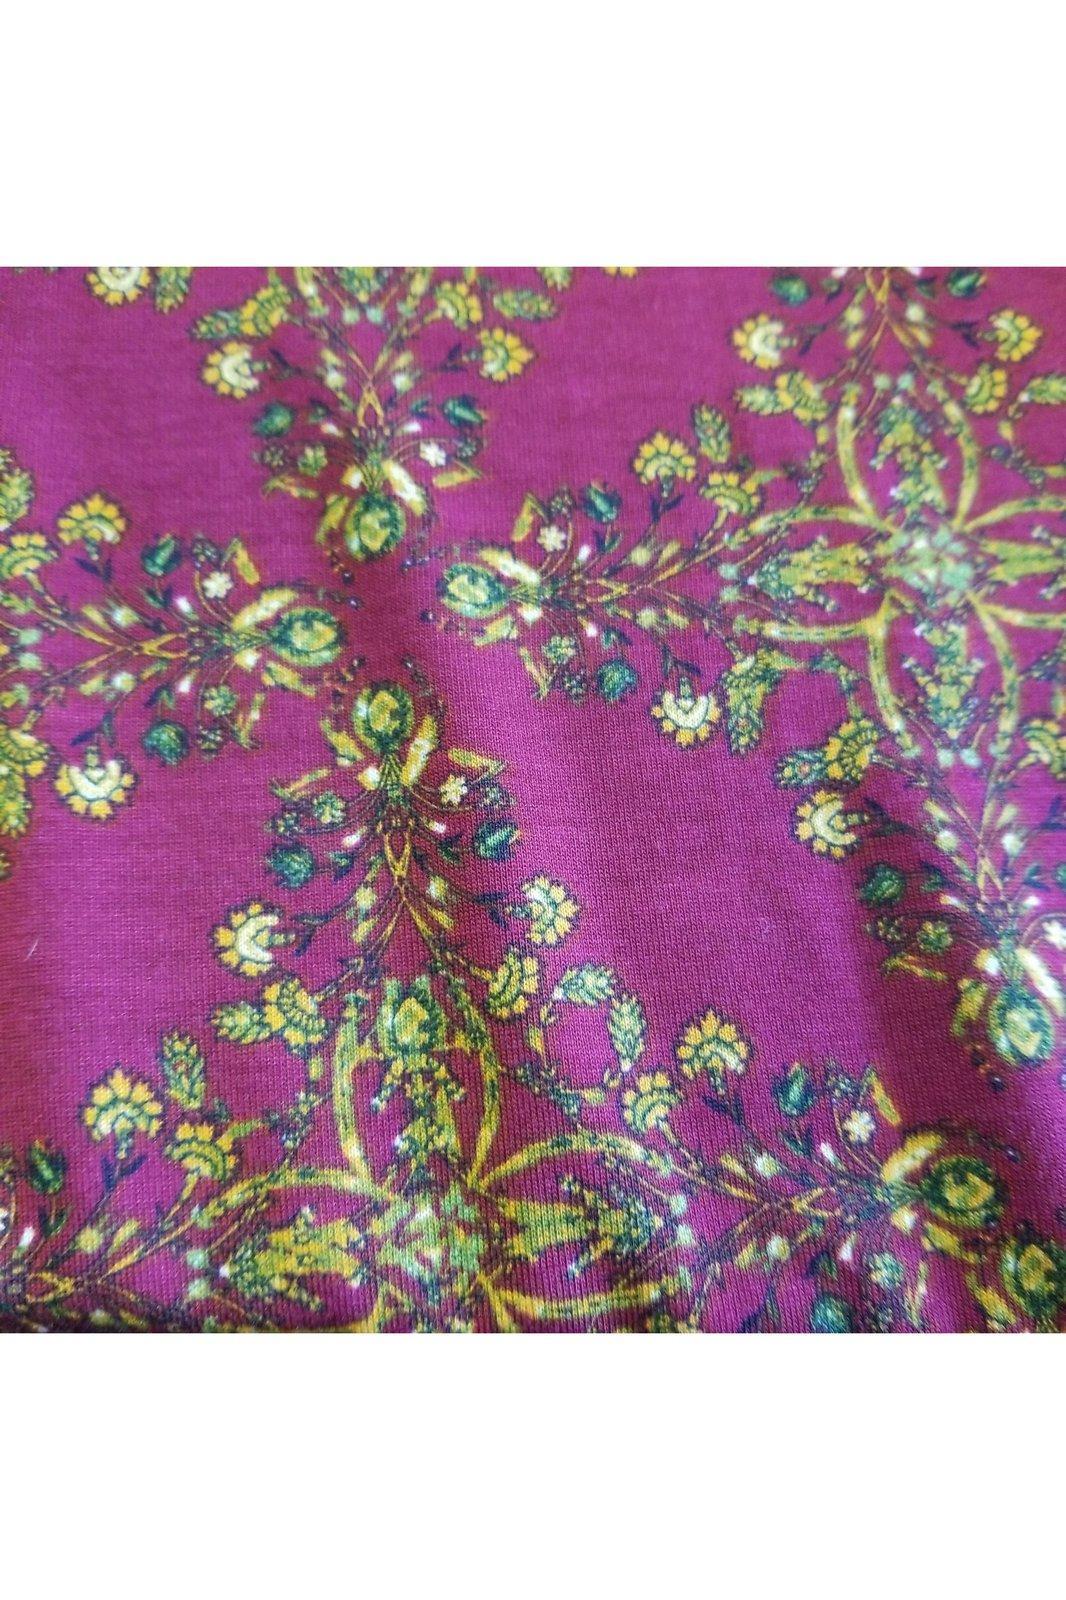 Nwt Lularoe purple multicolor dress sz M 